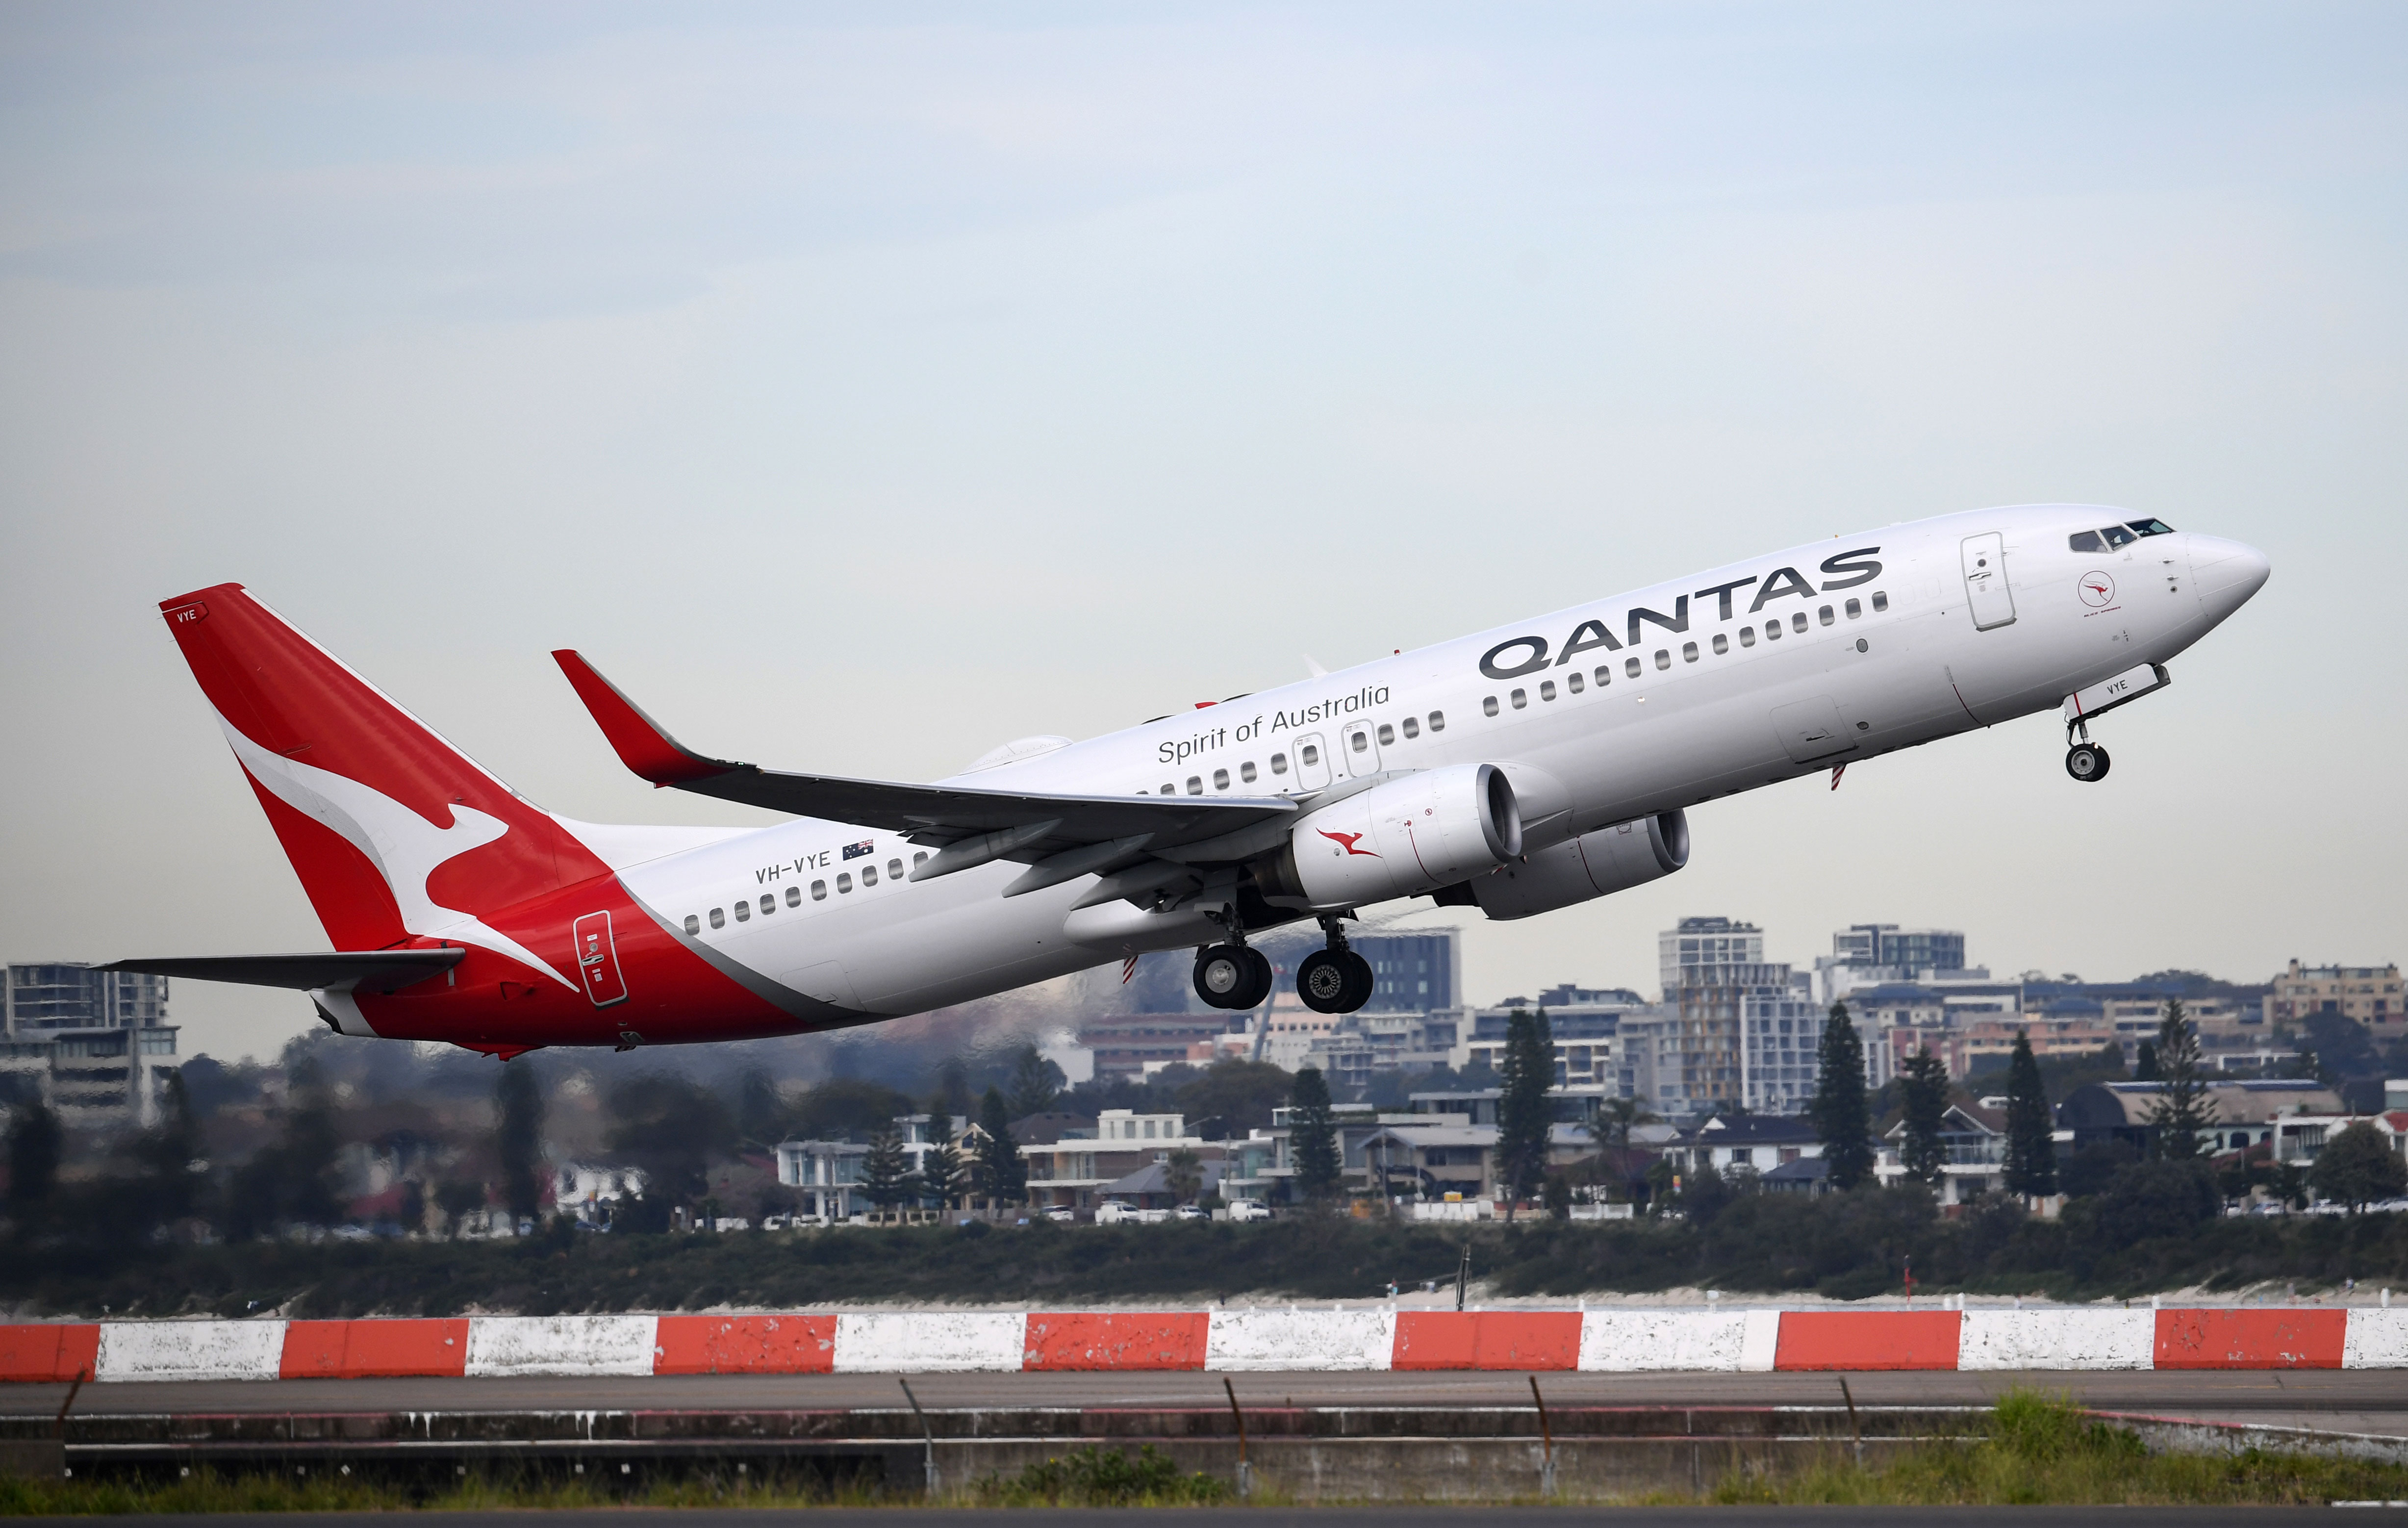 A Qantas plane takes off at Sydney's Kingsford Smith Airport in Australia on November 16.